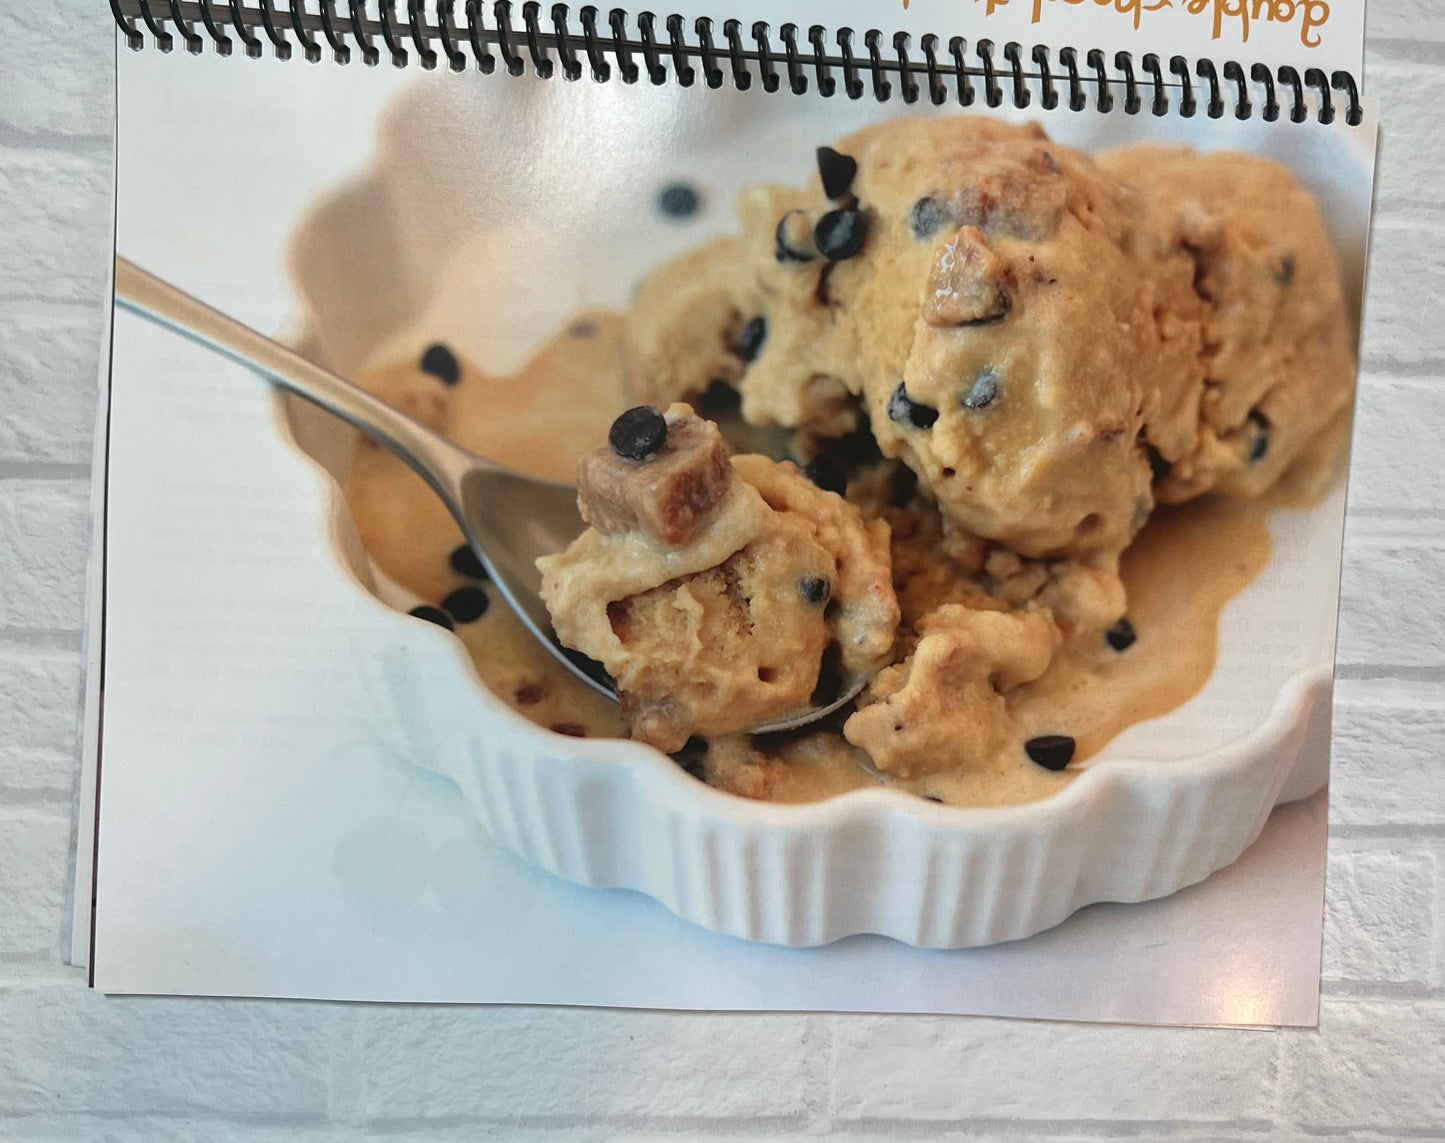 Just Making Ice Cream Cookbook - PRINT